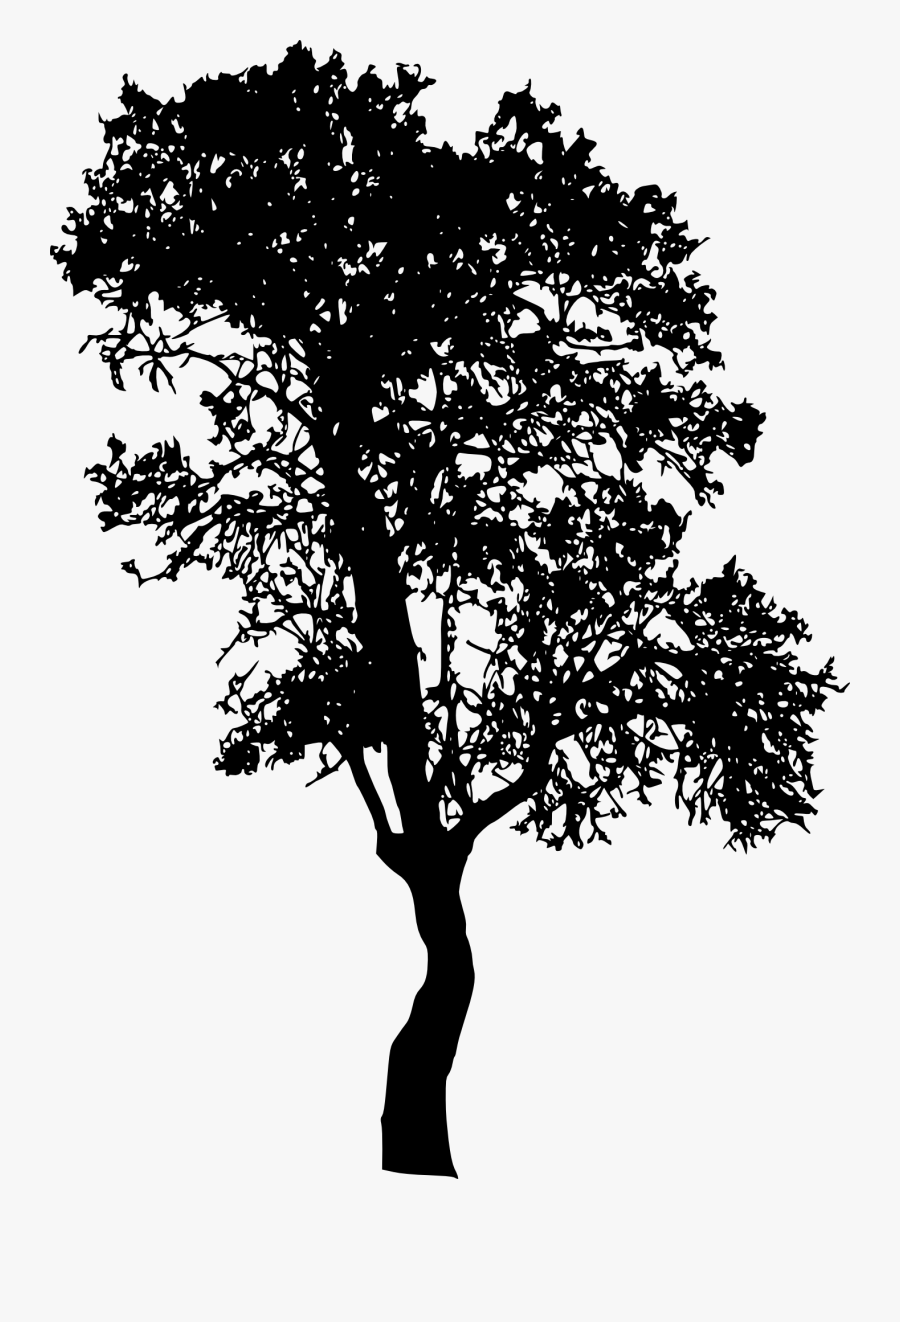 Tree Illustration Png, Transparent Clipart